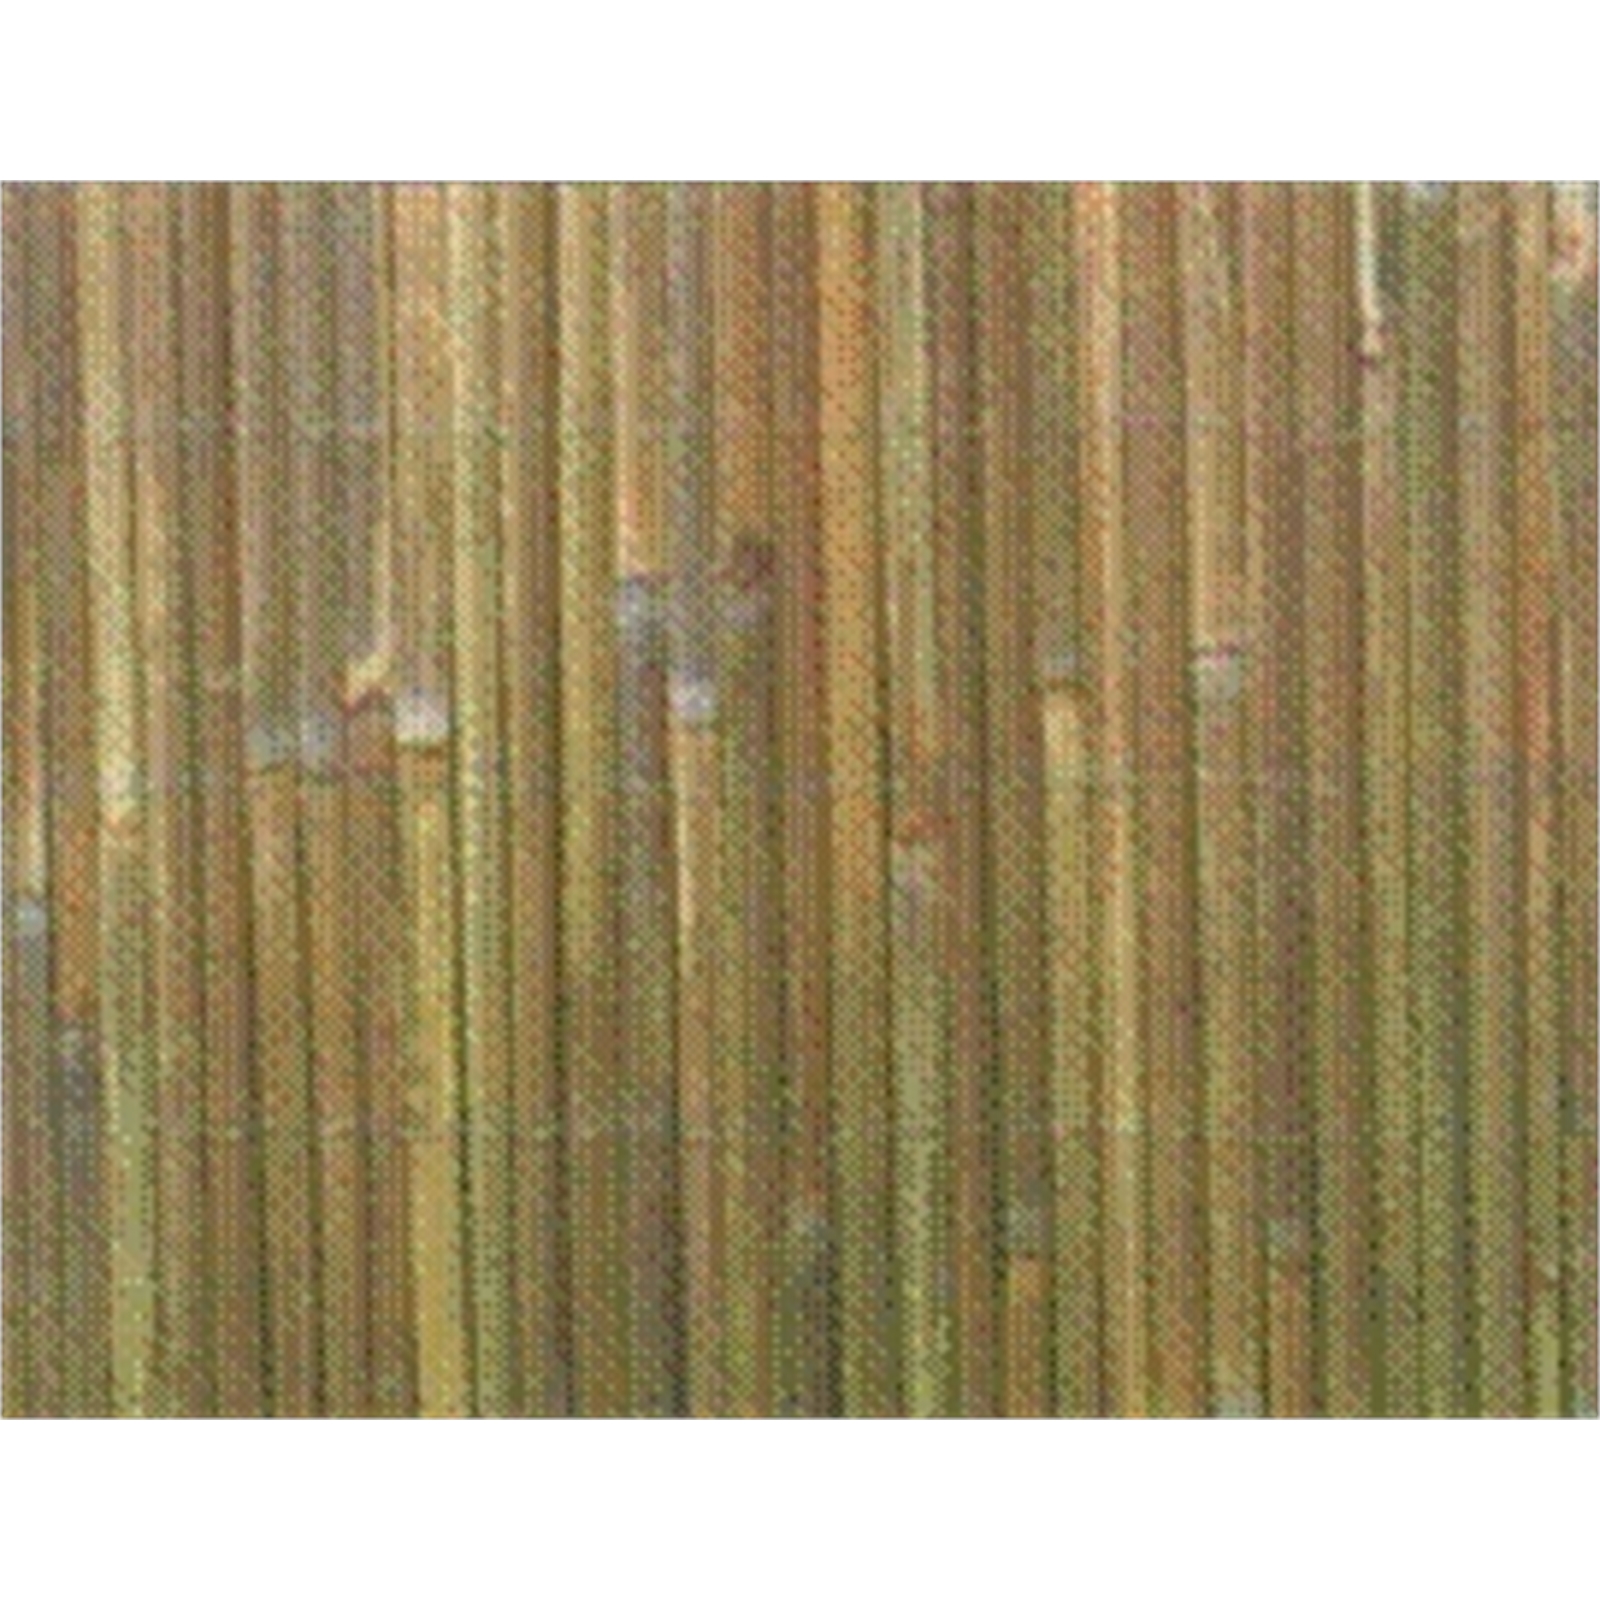 Eden 1 x 3m Bamboo Slat Fence Screening